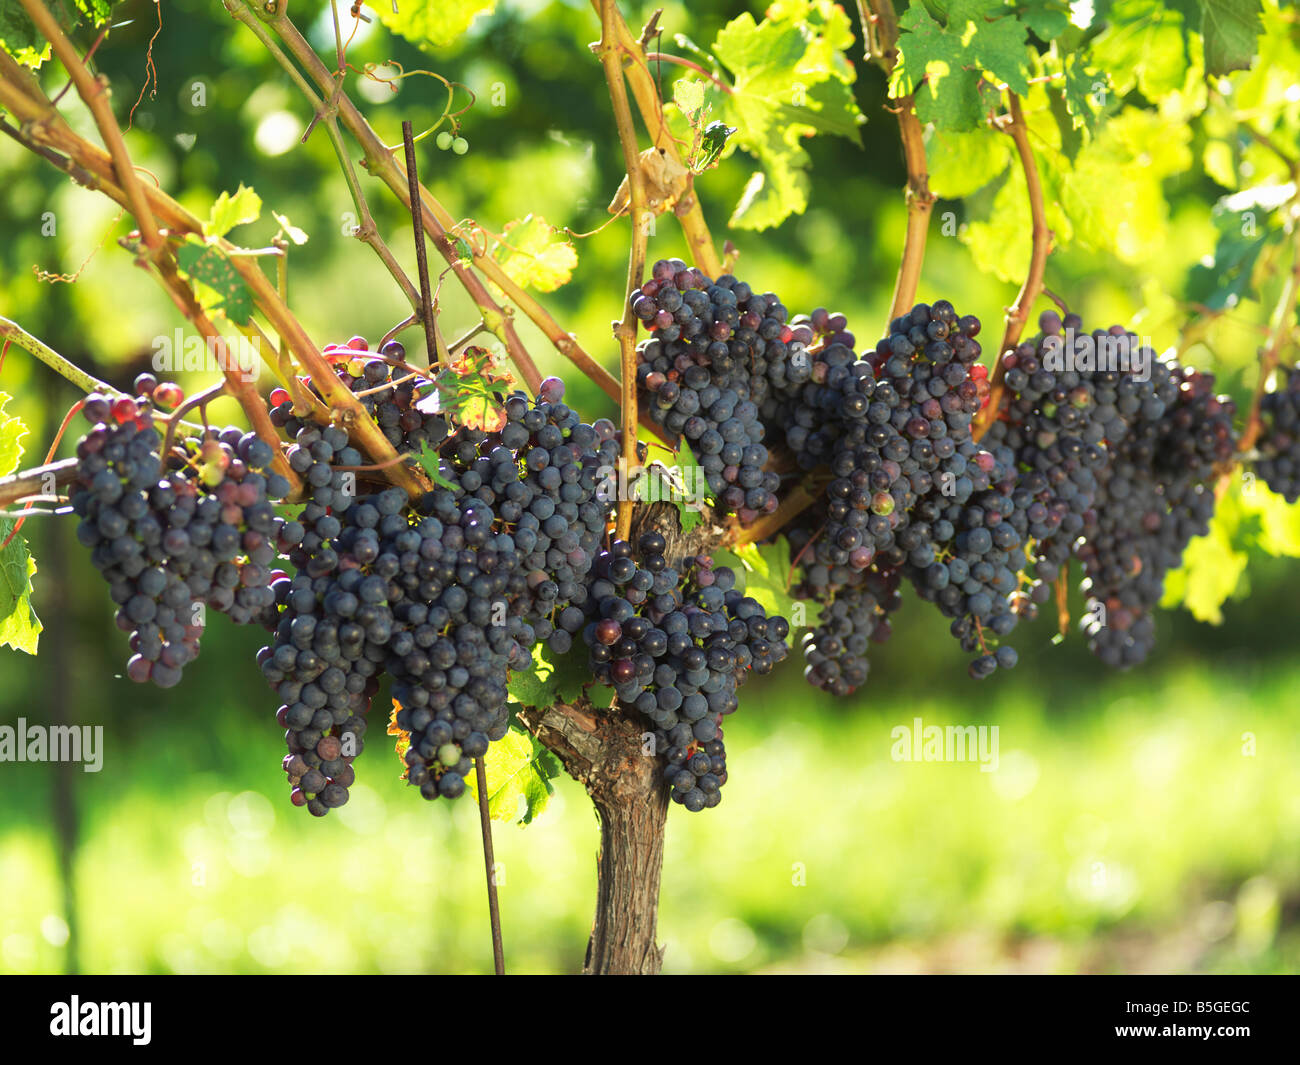 Canada,Ontario,Niagara-on-the-Lake,ripe grapes on the vine Stock Photo